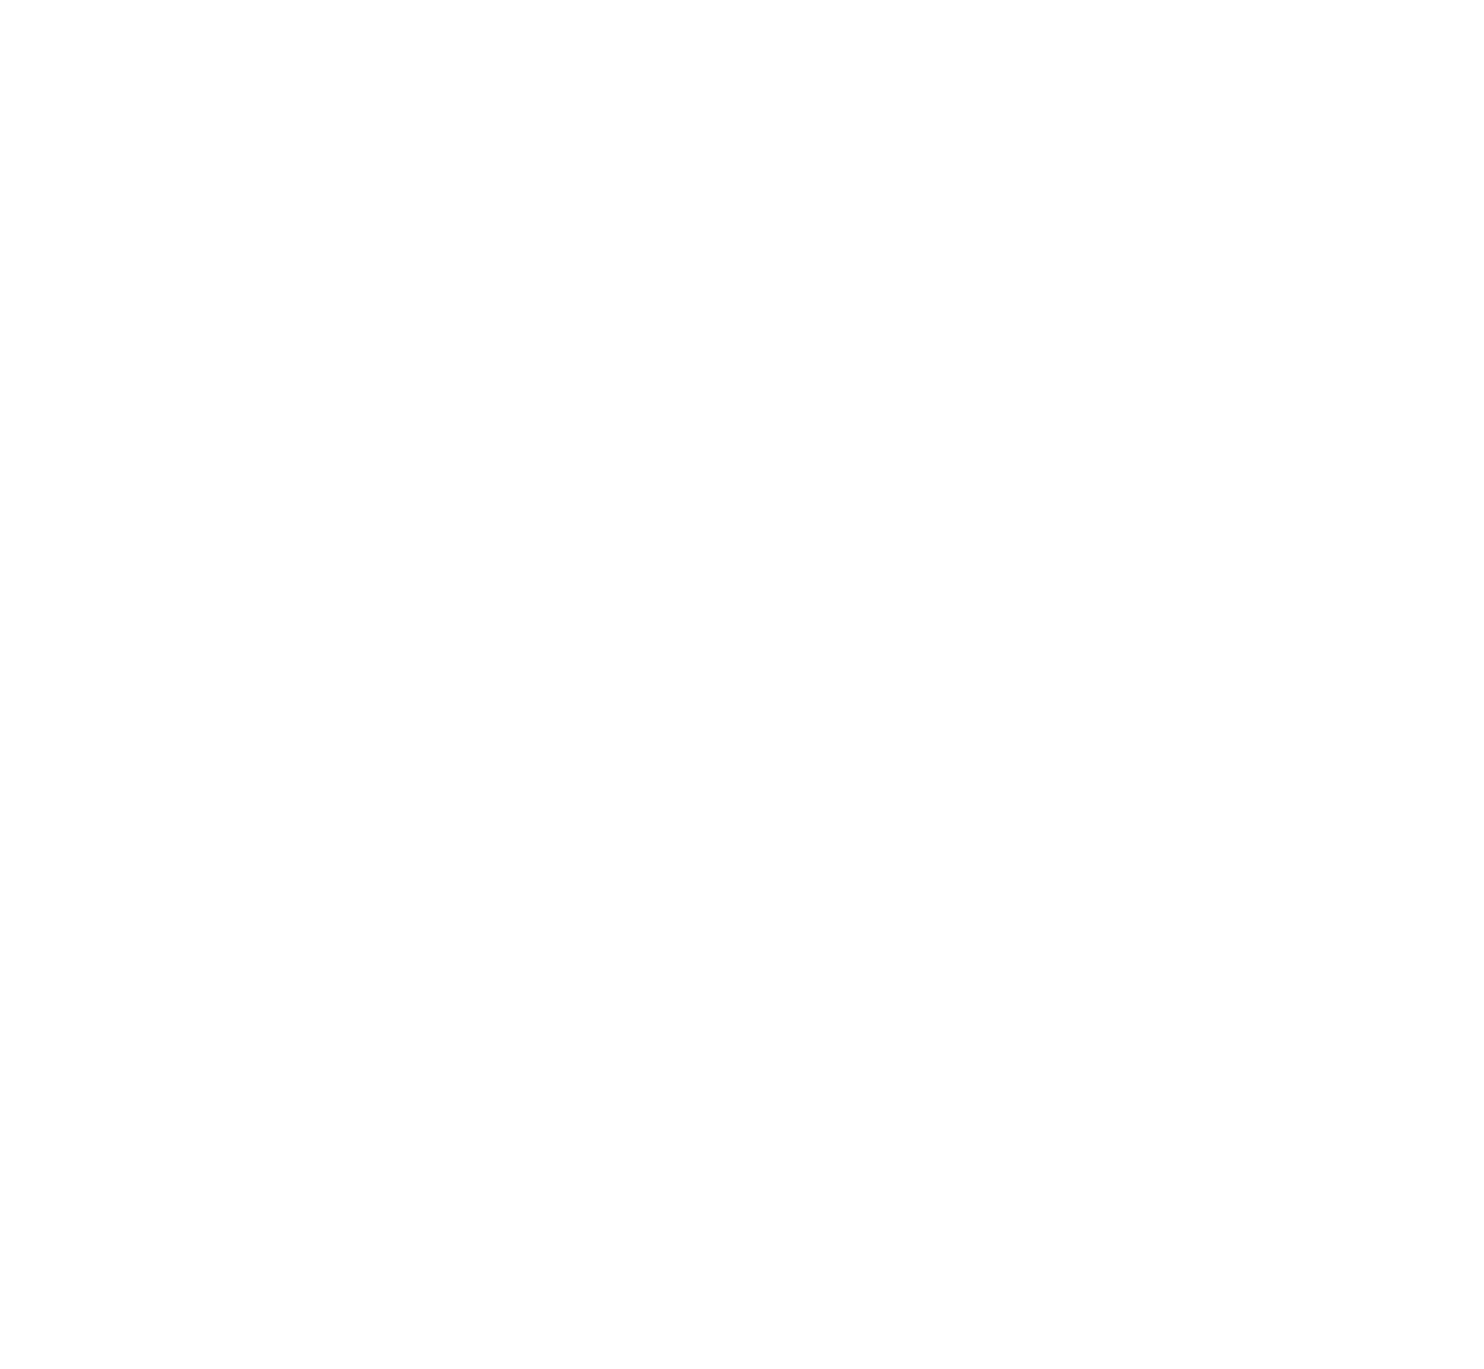 The Little Marketing Company